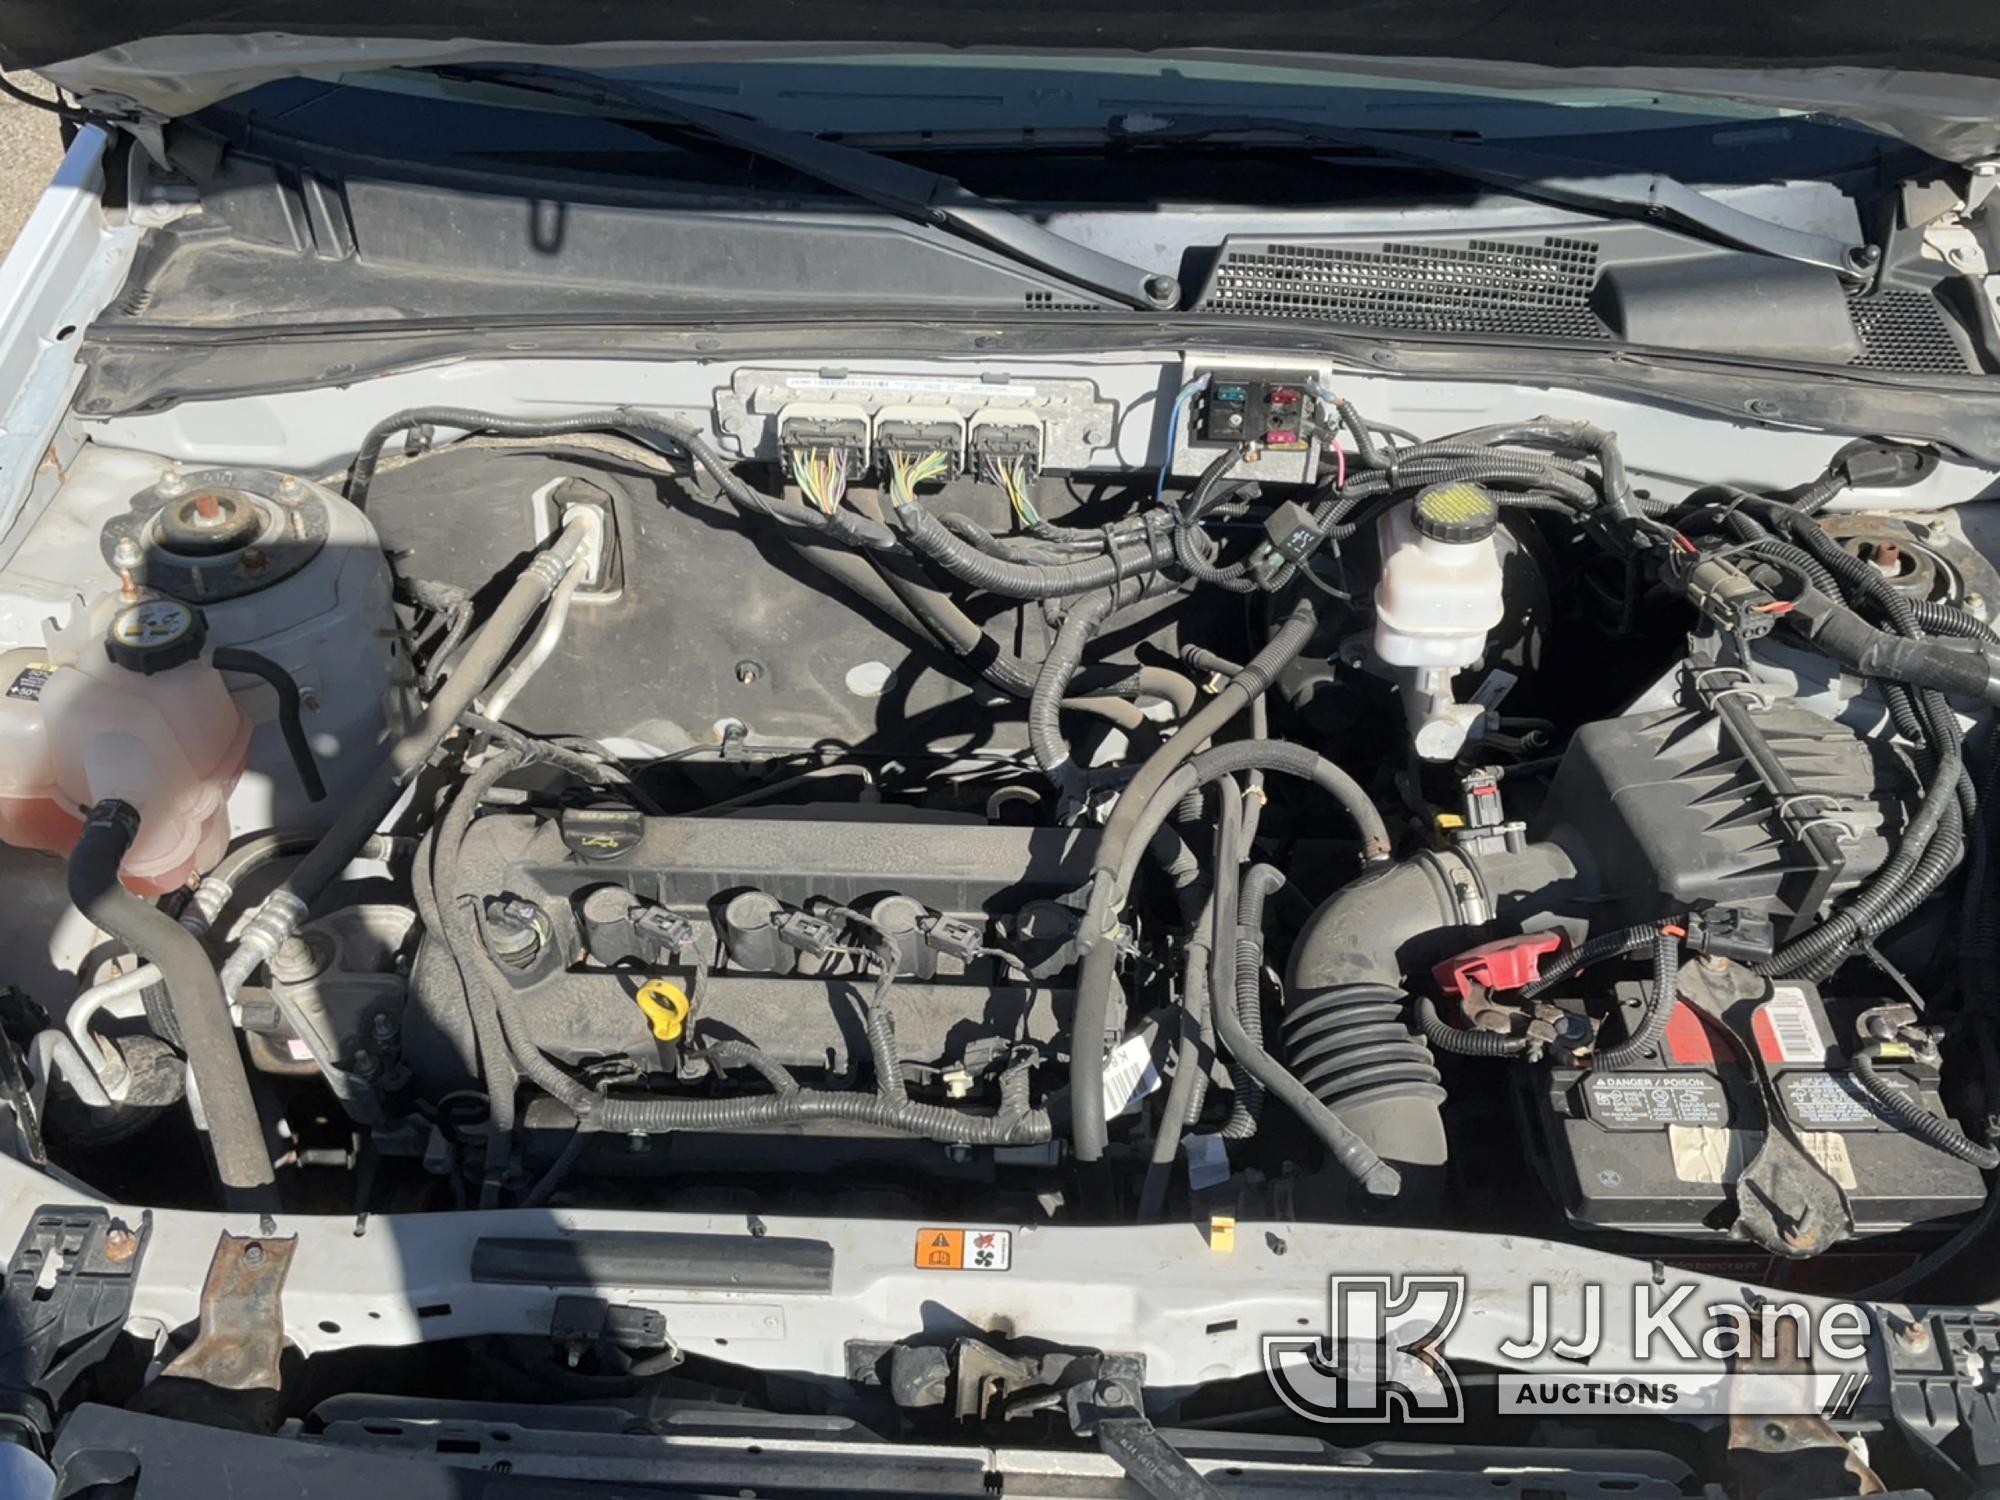 (South Beloit, IL) 2012 Ford Escape 4x4 4-Door Sport Utility Vehicle Runs, Moves, Rust Damage